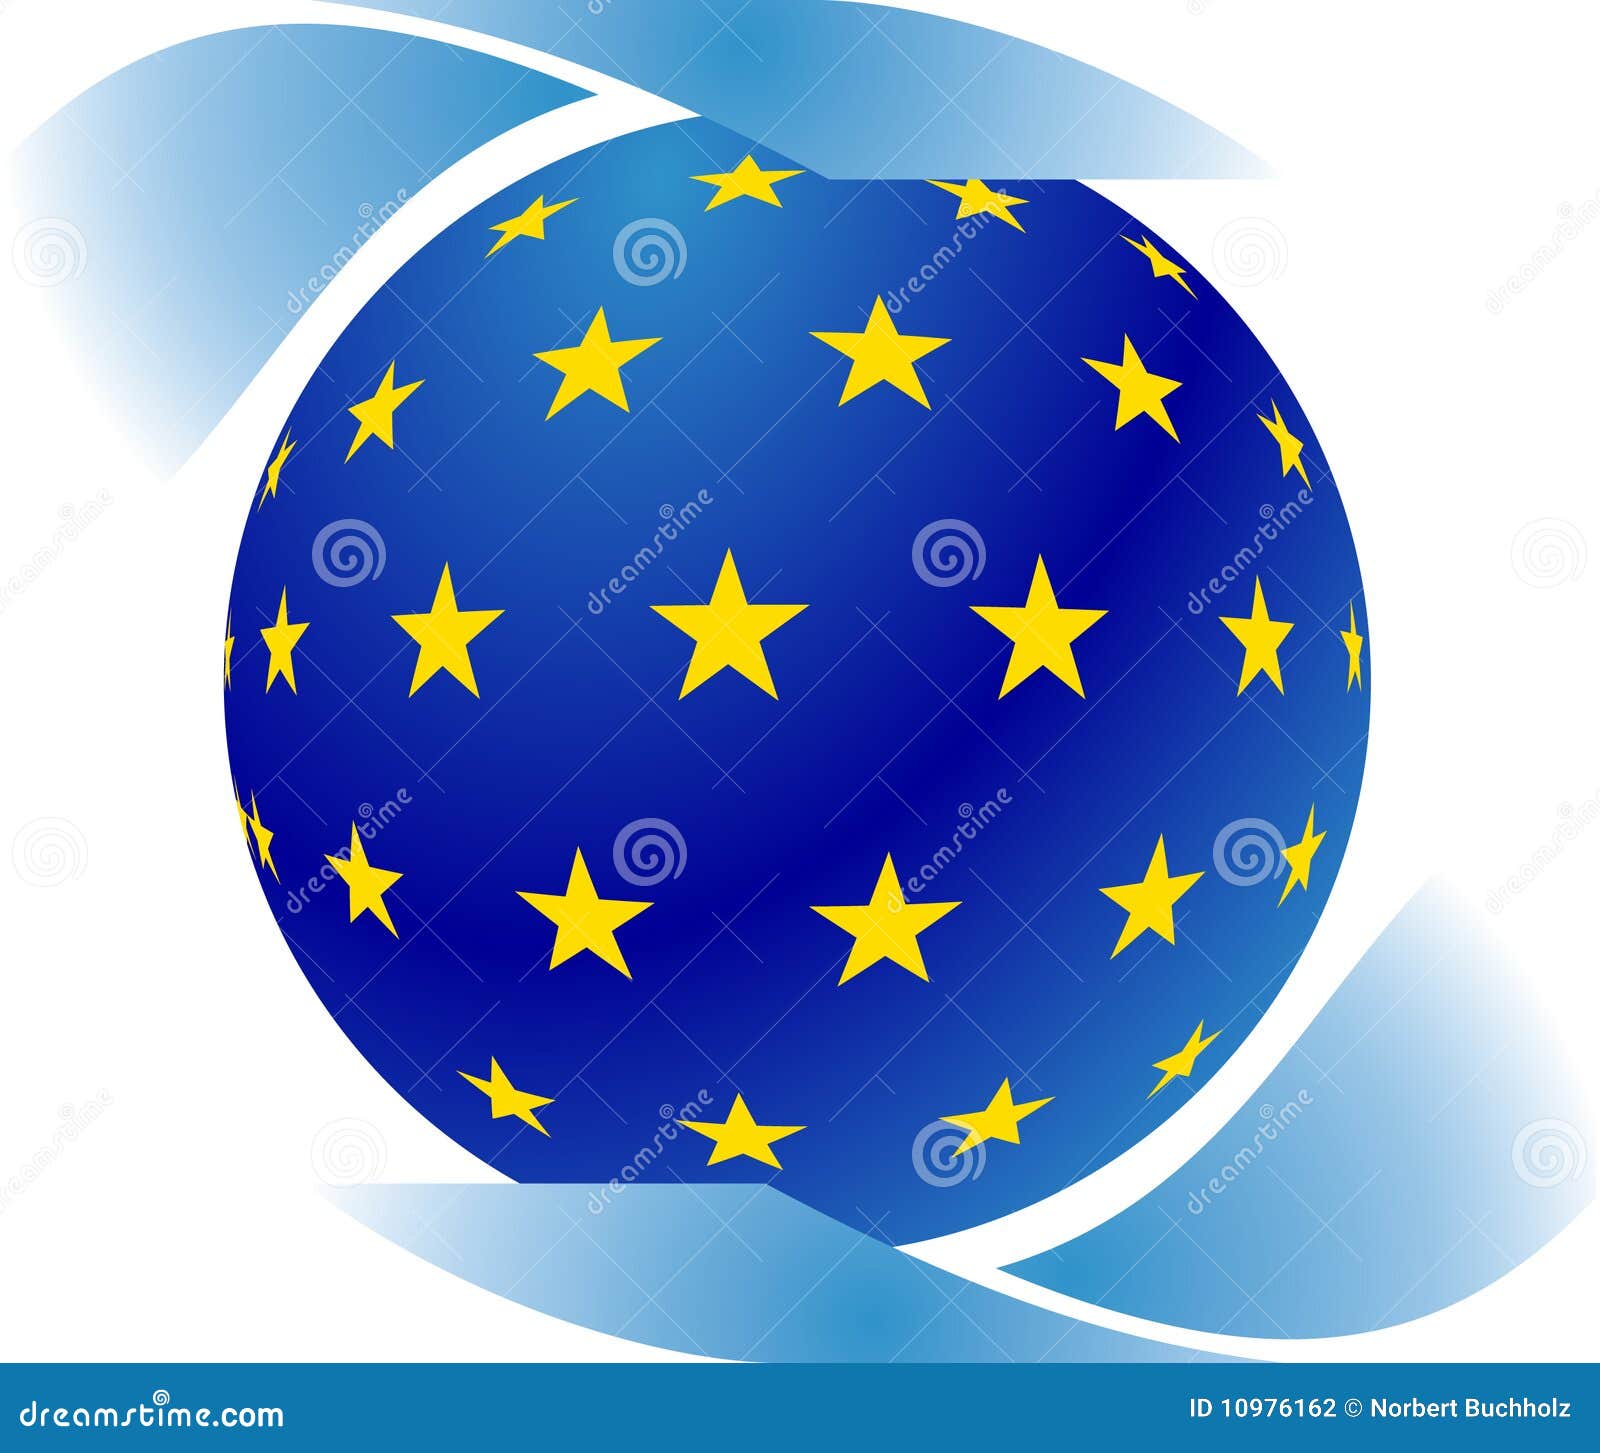 European symbol stock vector. Illustration of symbol - 10976162